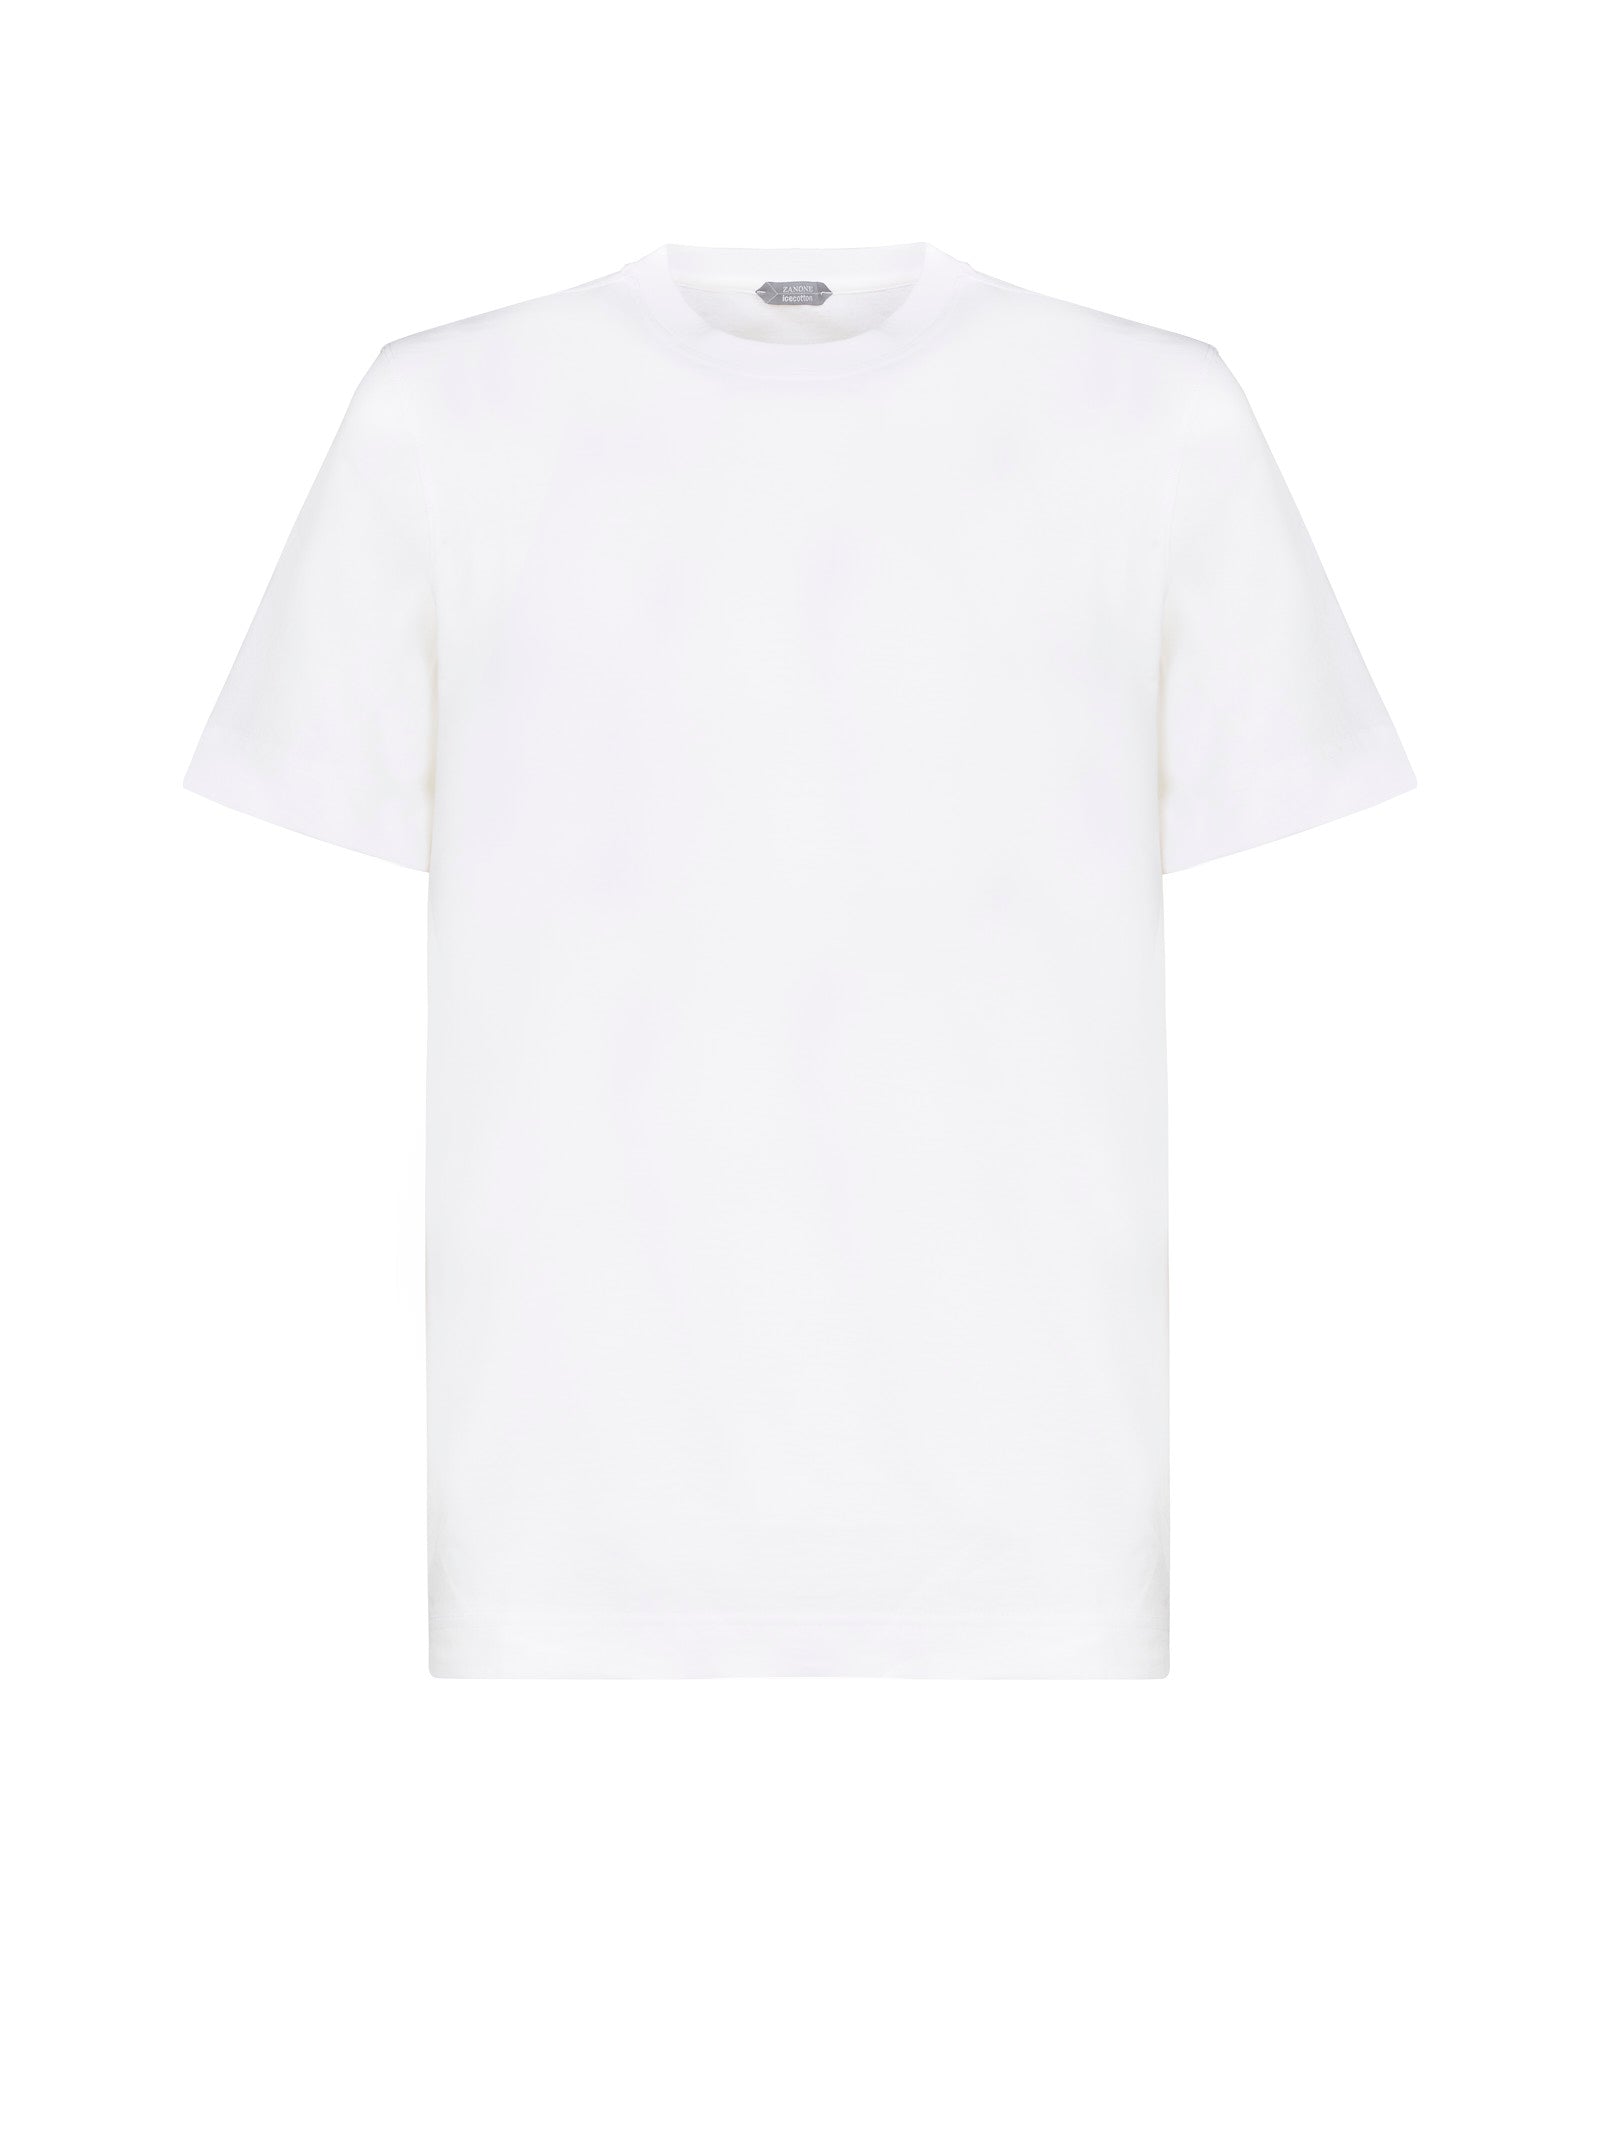 T-shirt ZANONE
Bianco